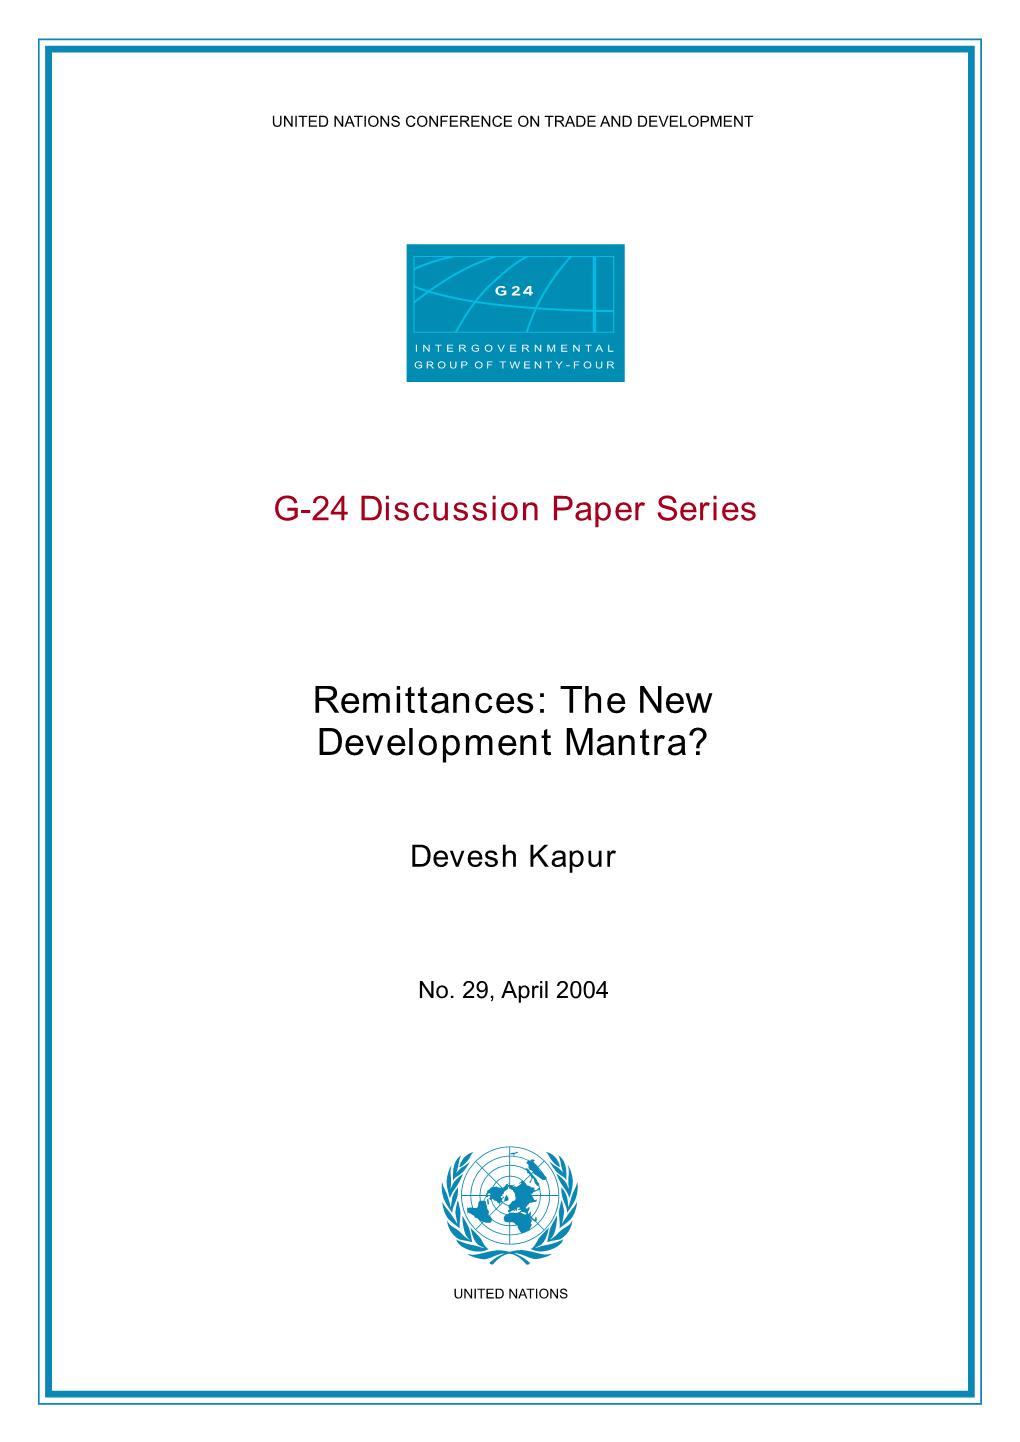 Remittances: the New Development Mantra?